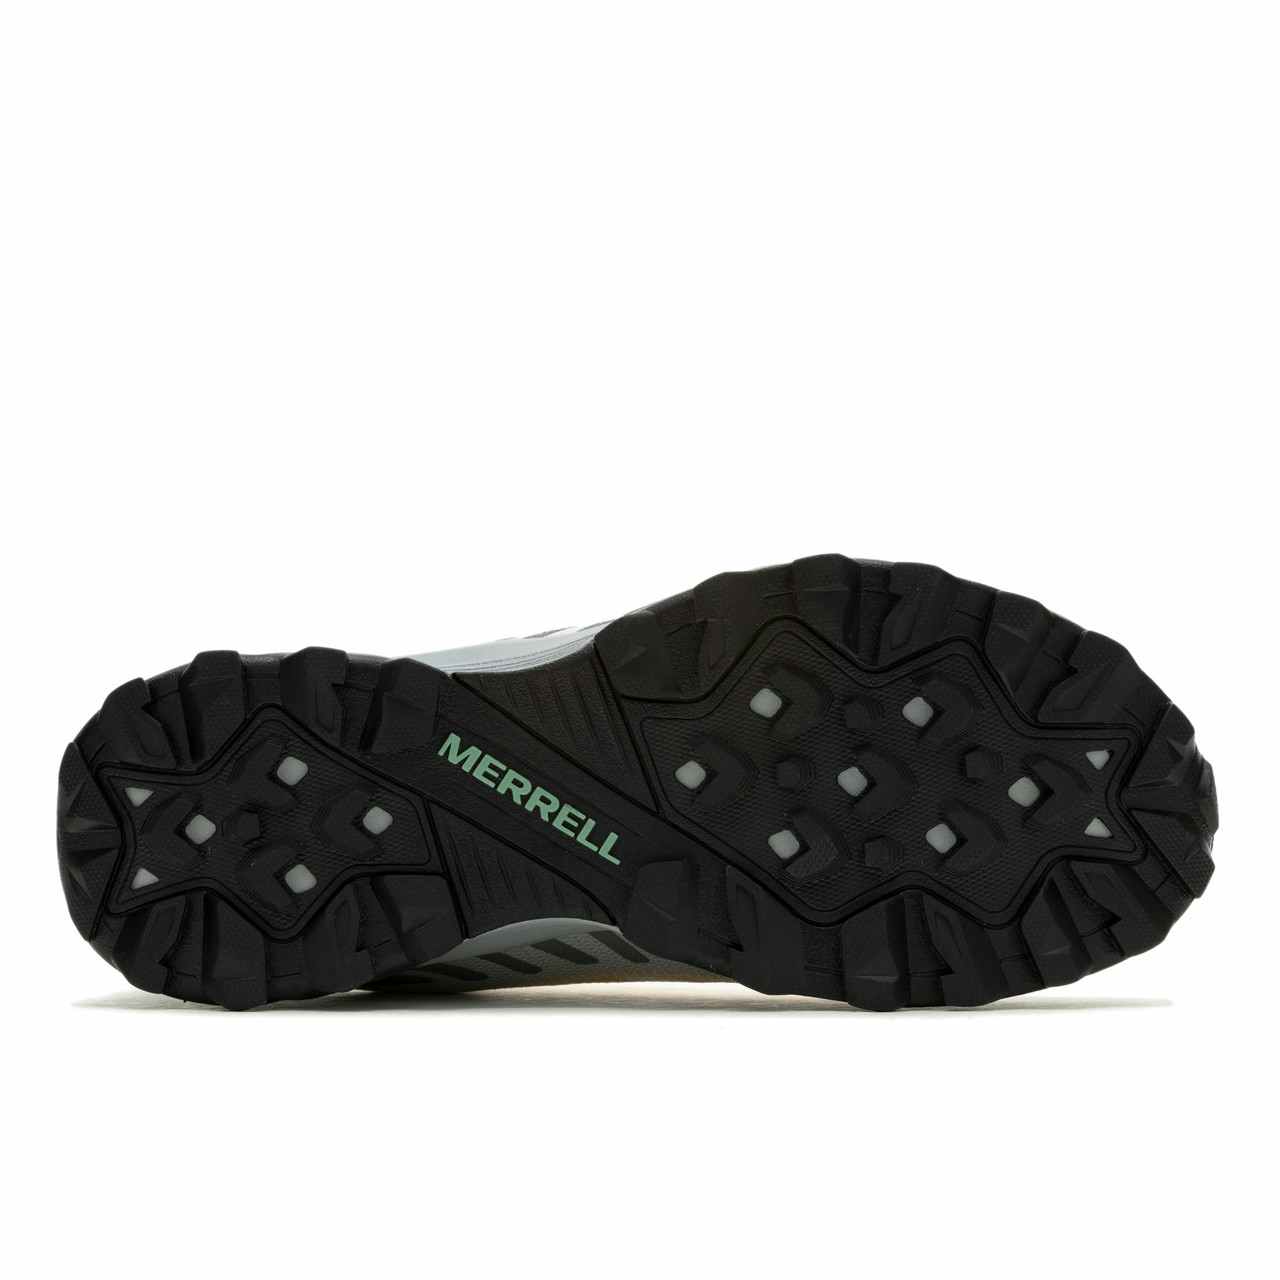 Chaussures de courte randonnée Speed Eco Aspen/Jade